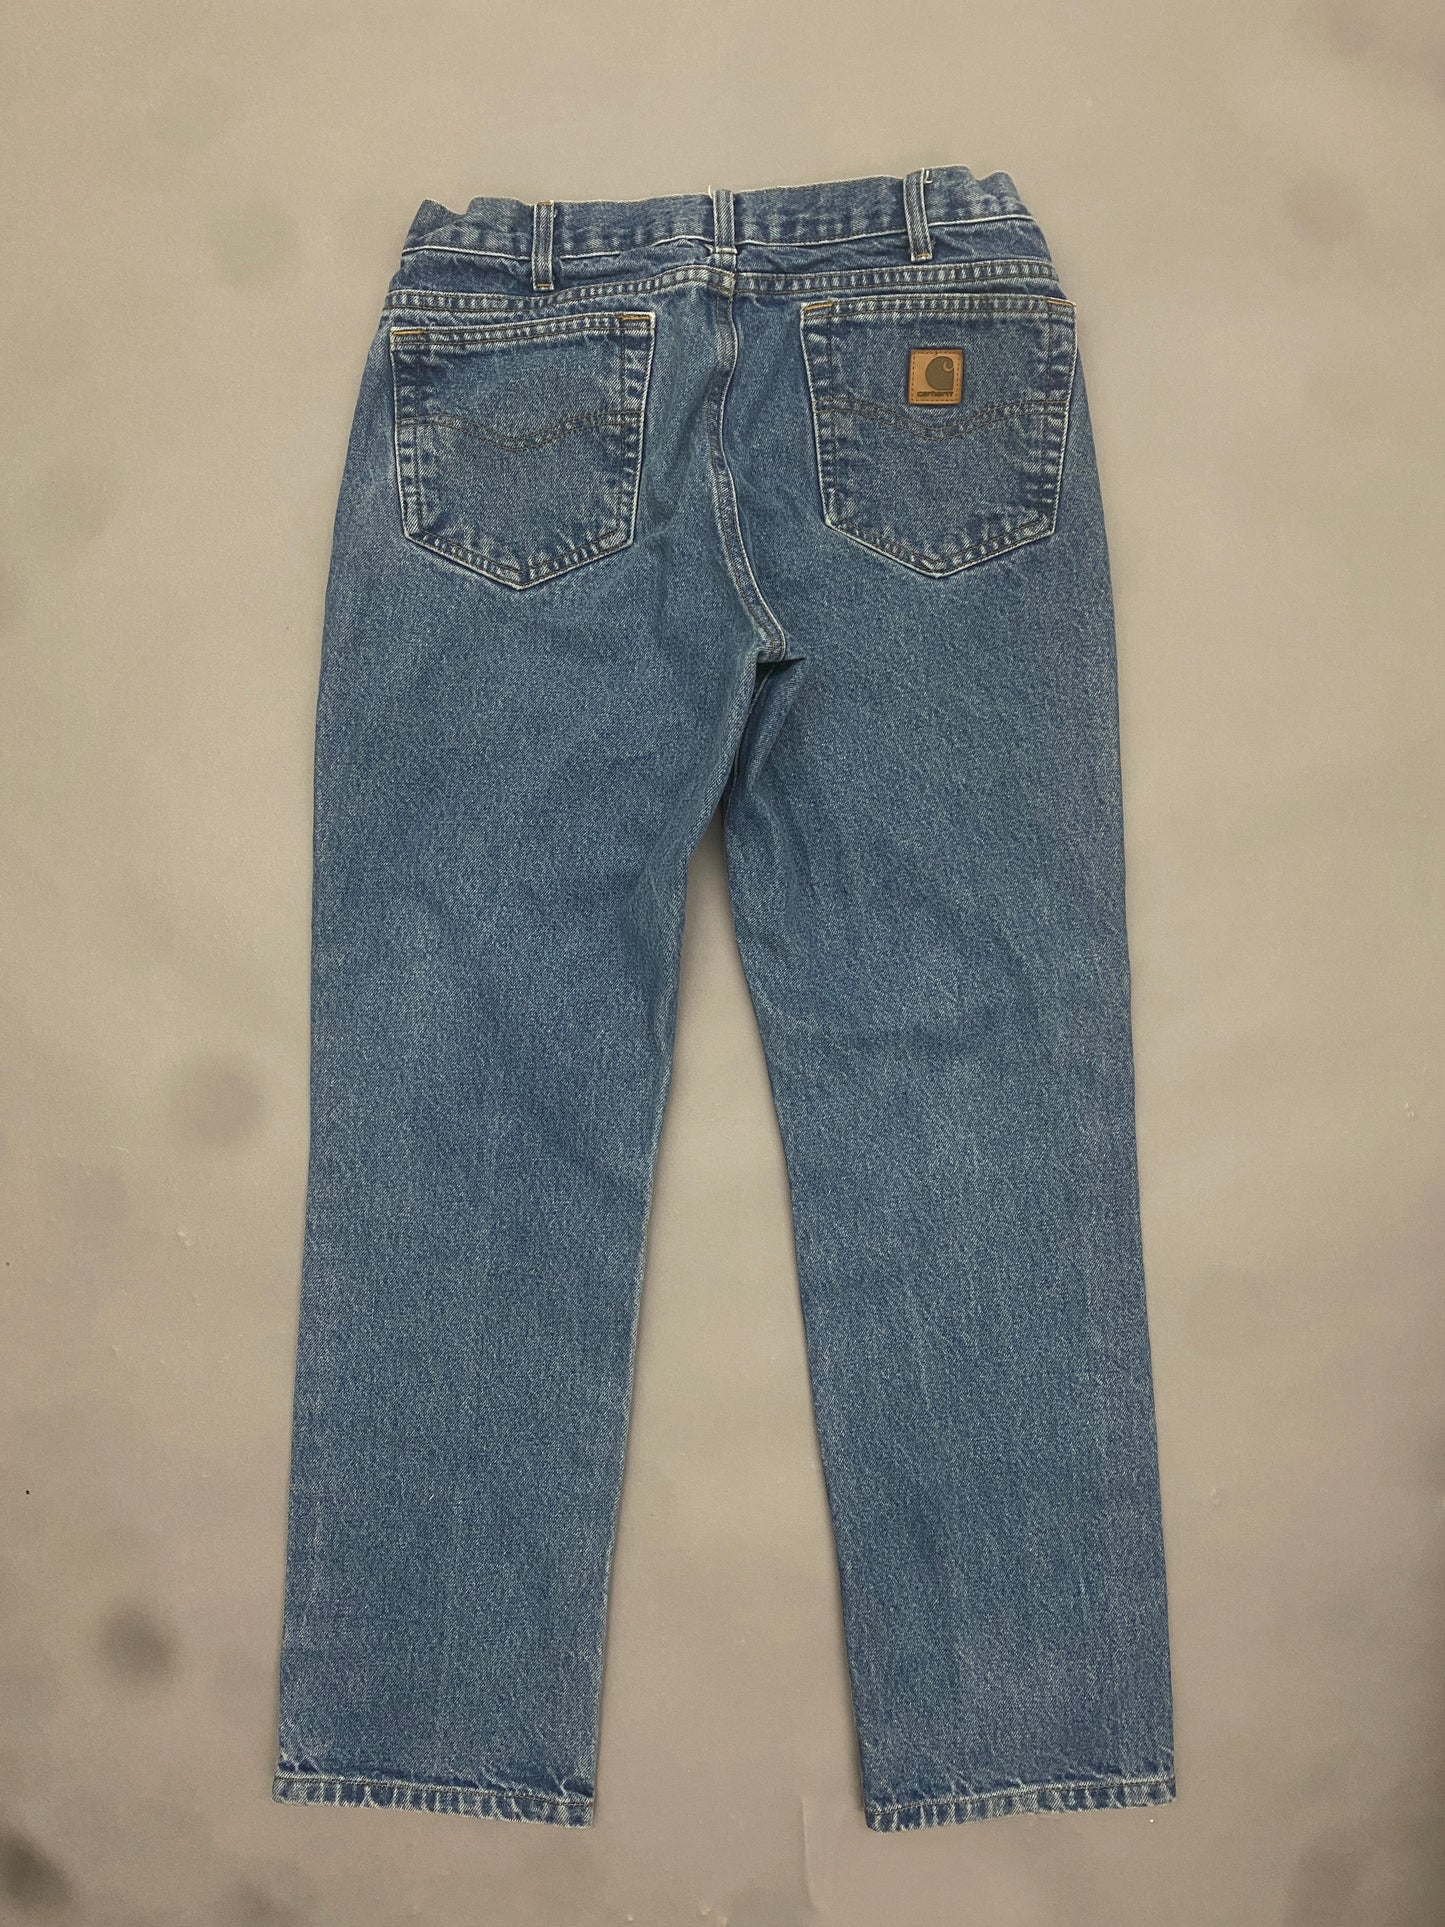 Jeans Carhartt Vintage - 33 x 30